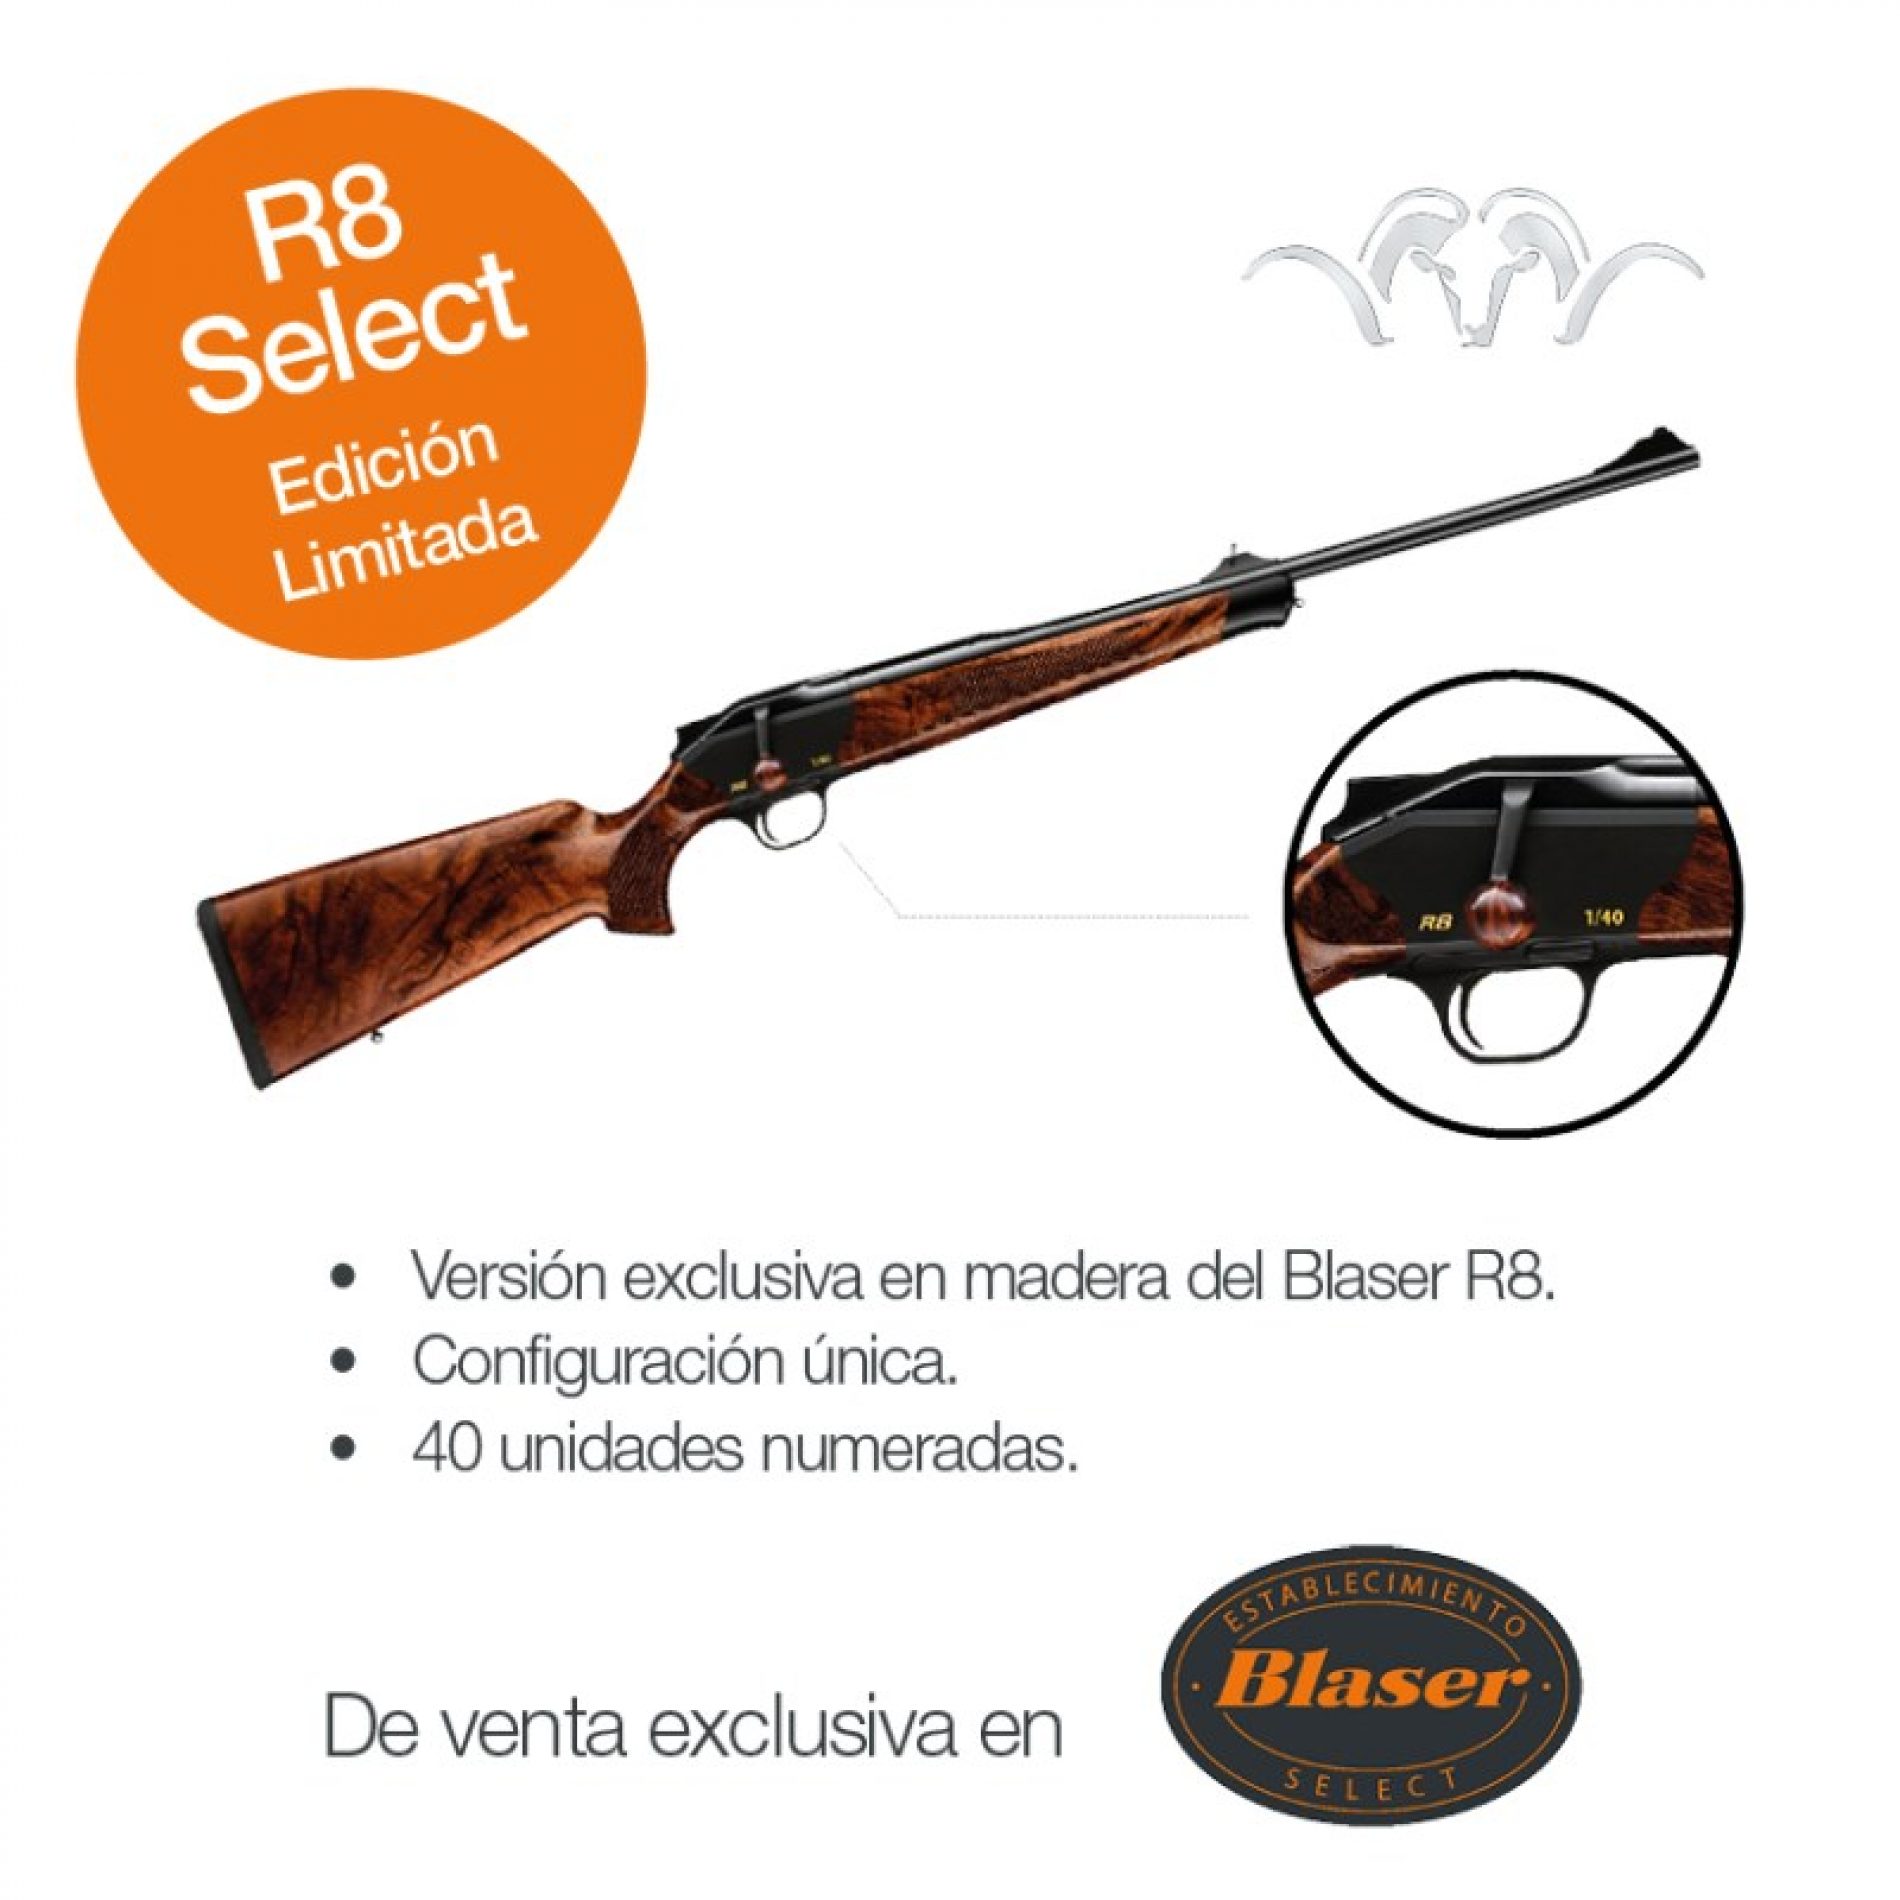 40 únicas piezas para España del Rifle Blaser R8 Select Edición Limitada.